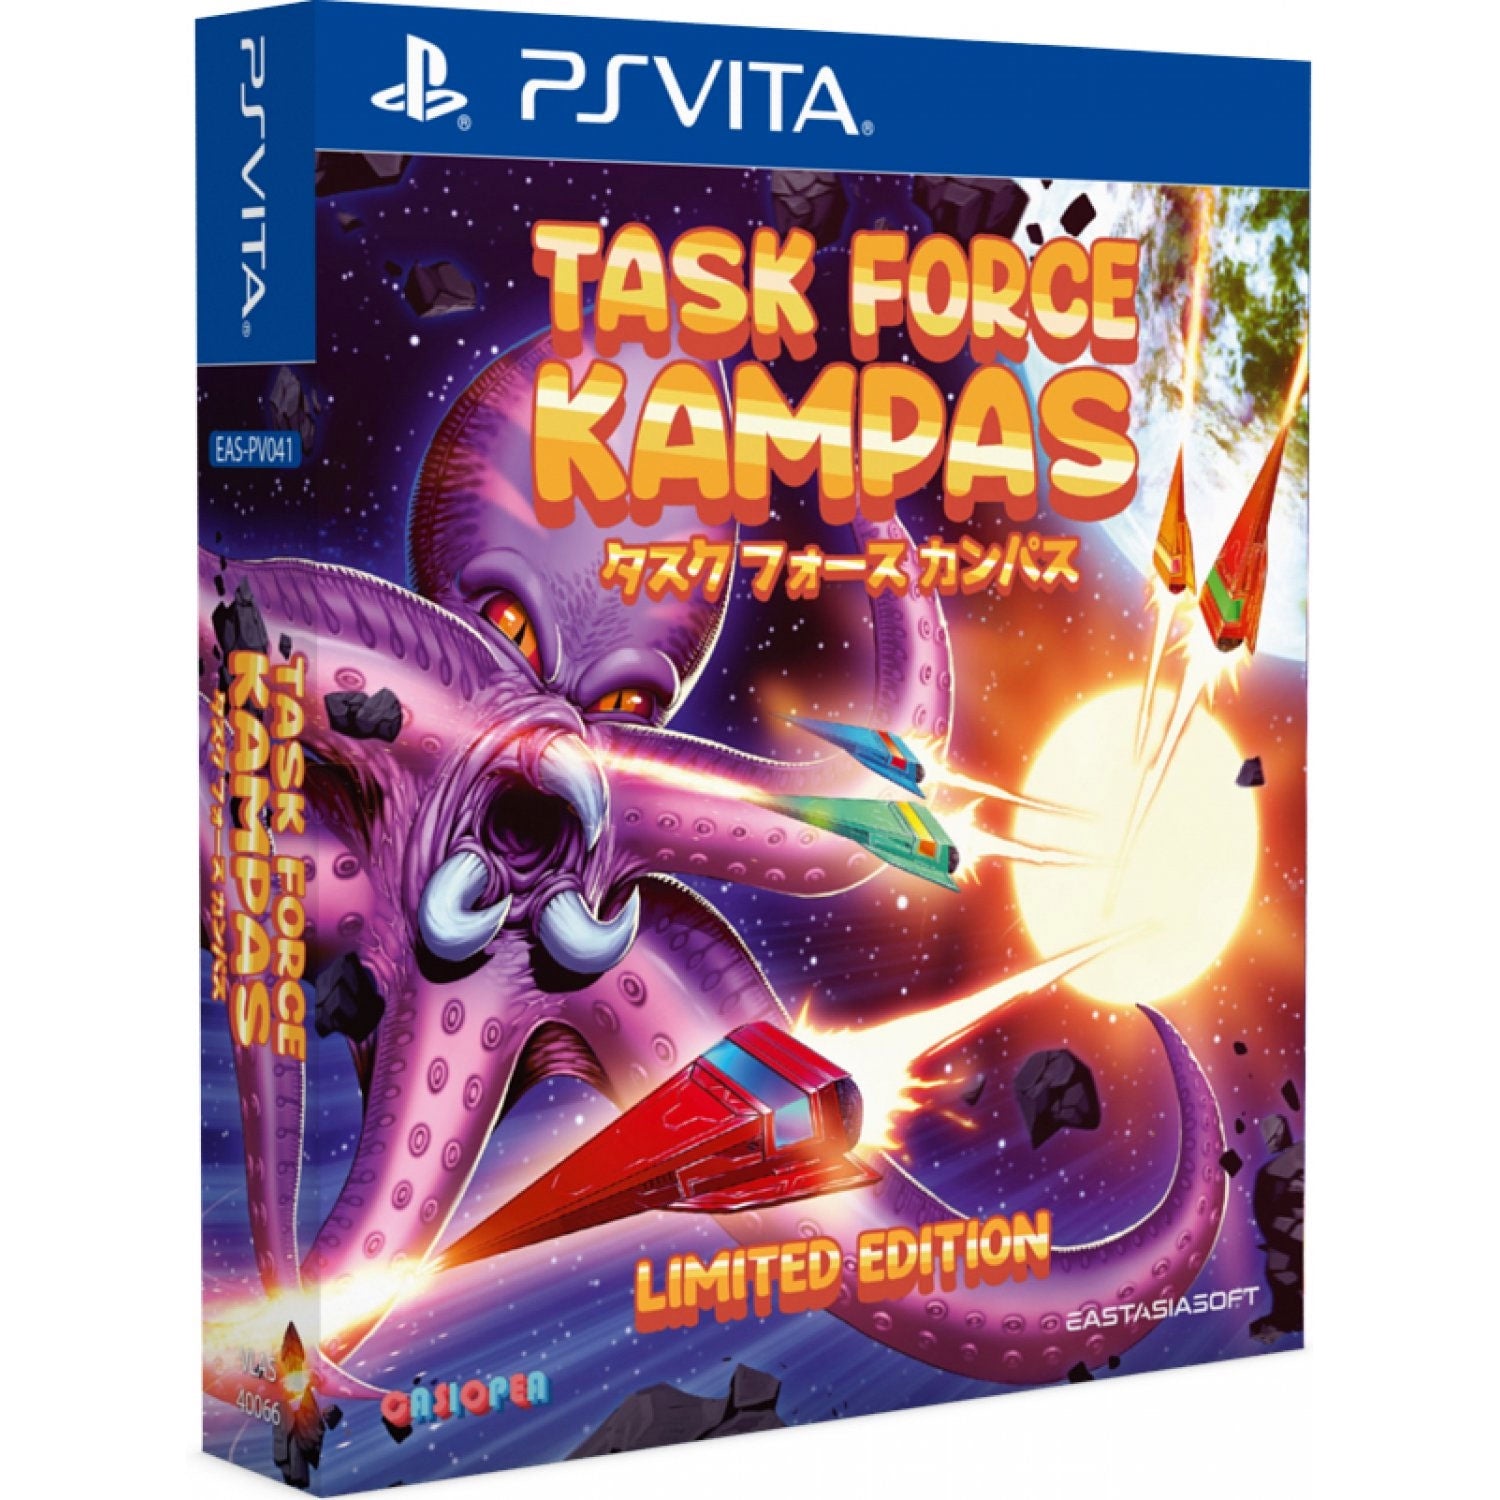 Task Force Kampas (Limited Edition) - PS Vita